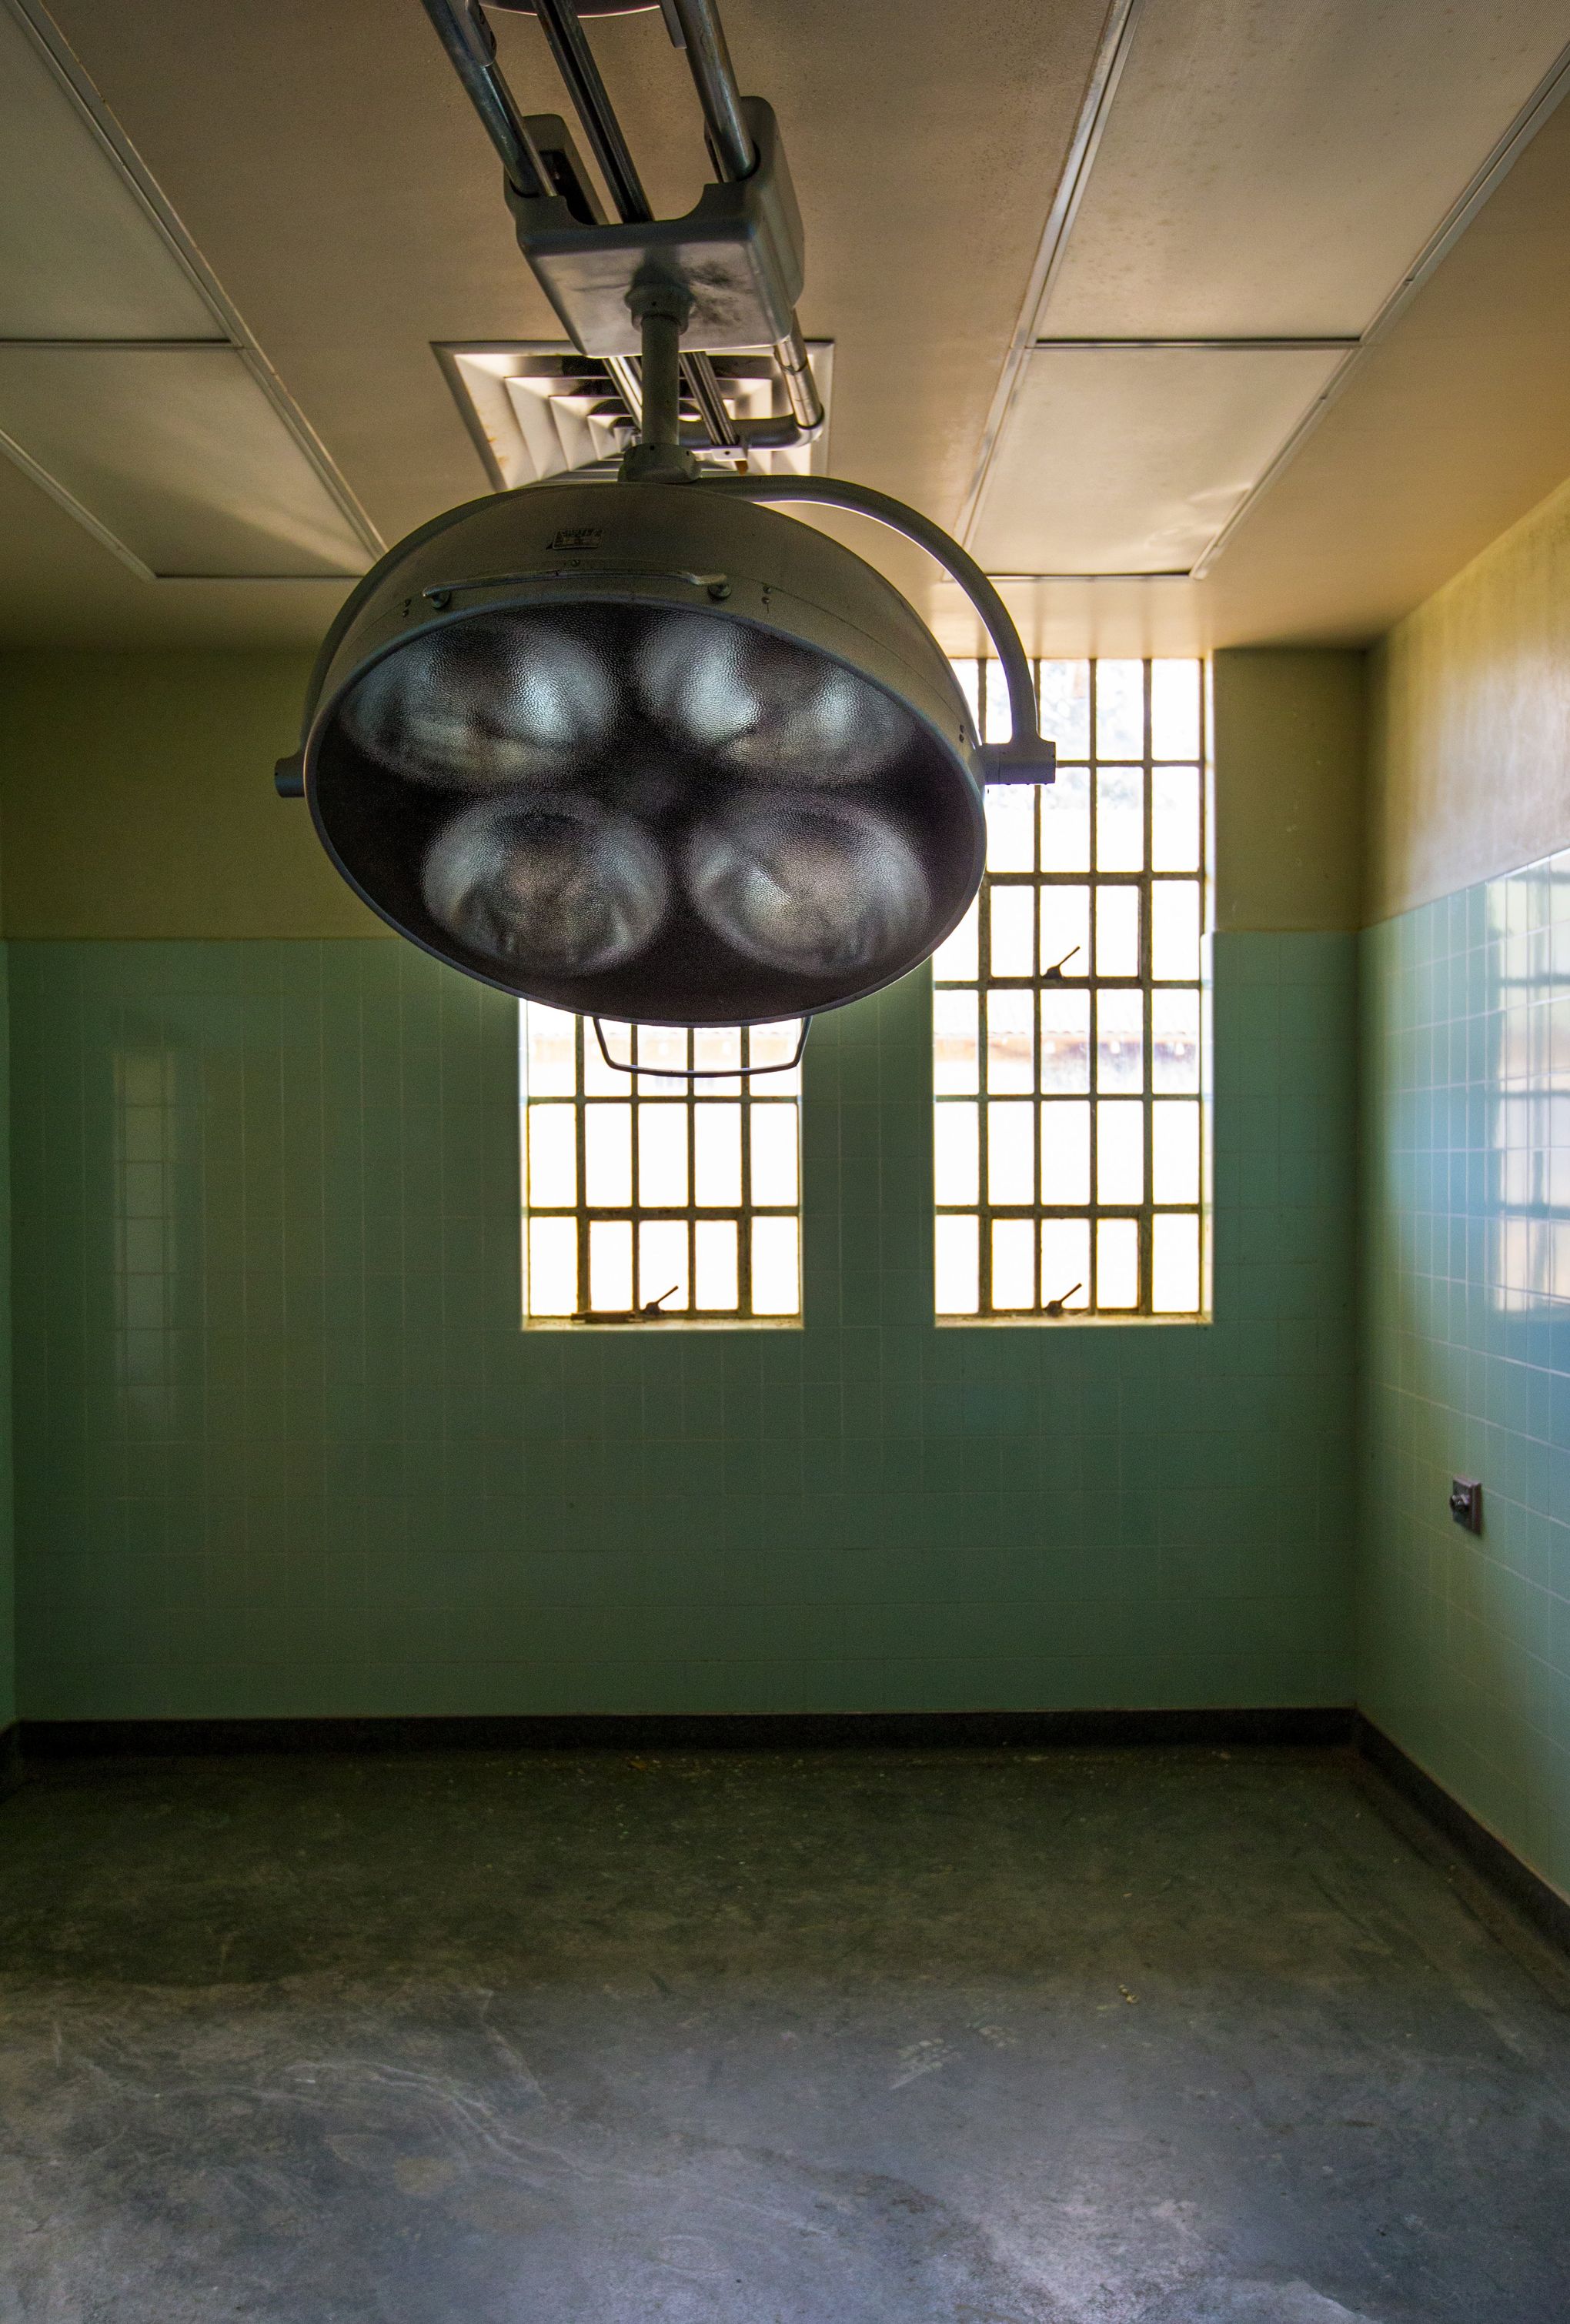 insane asylum hospital